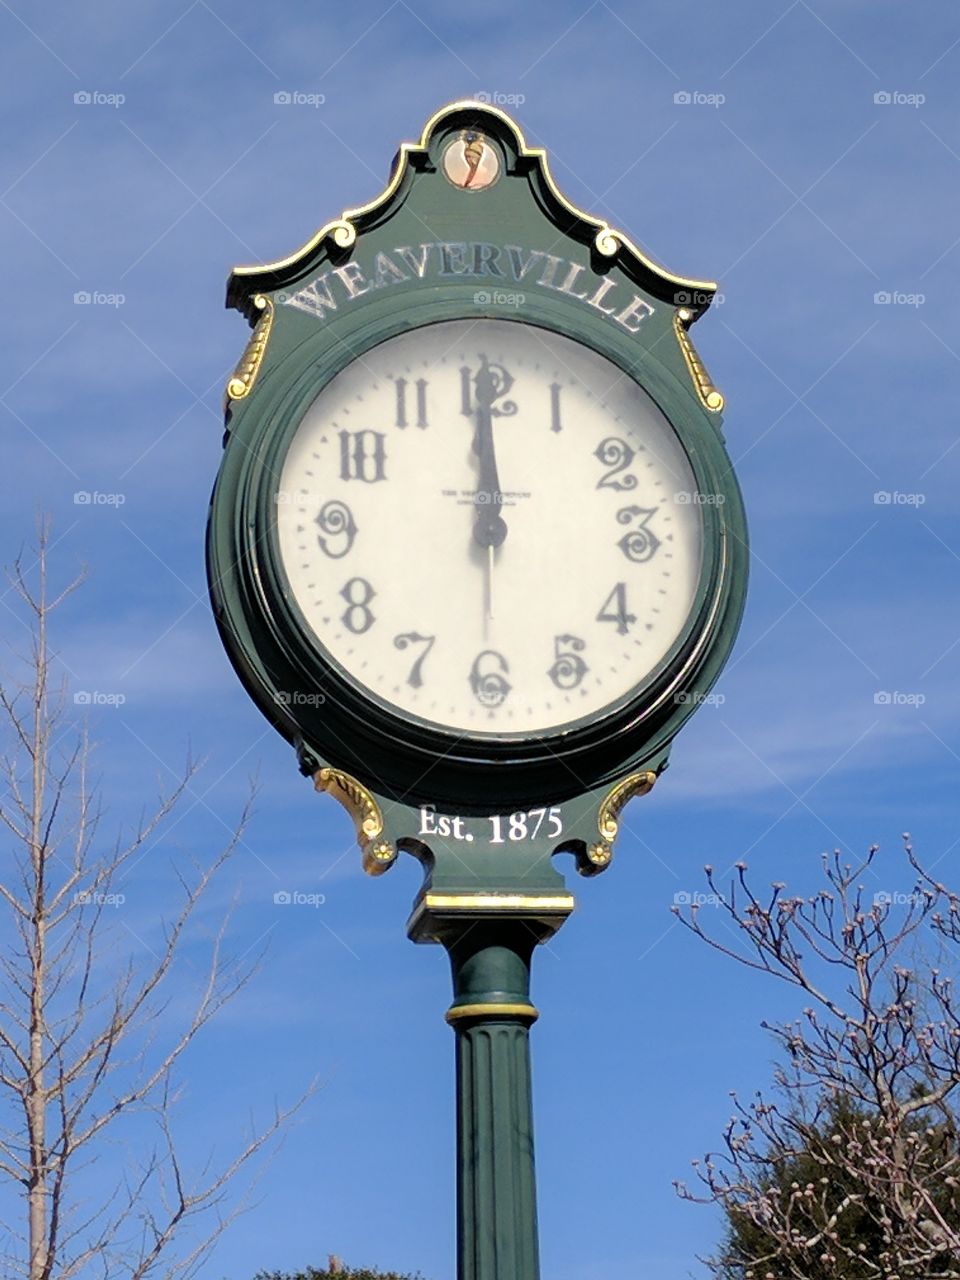 Town clock in Weaverville NC